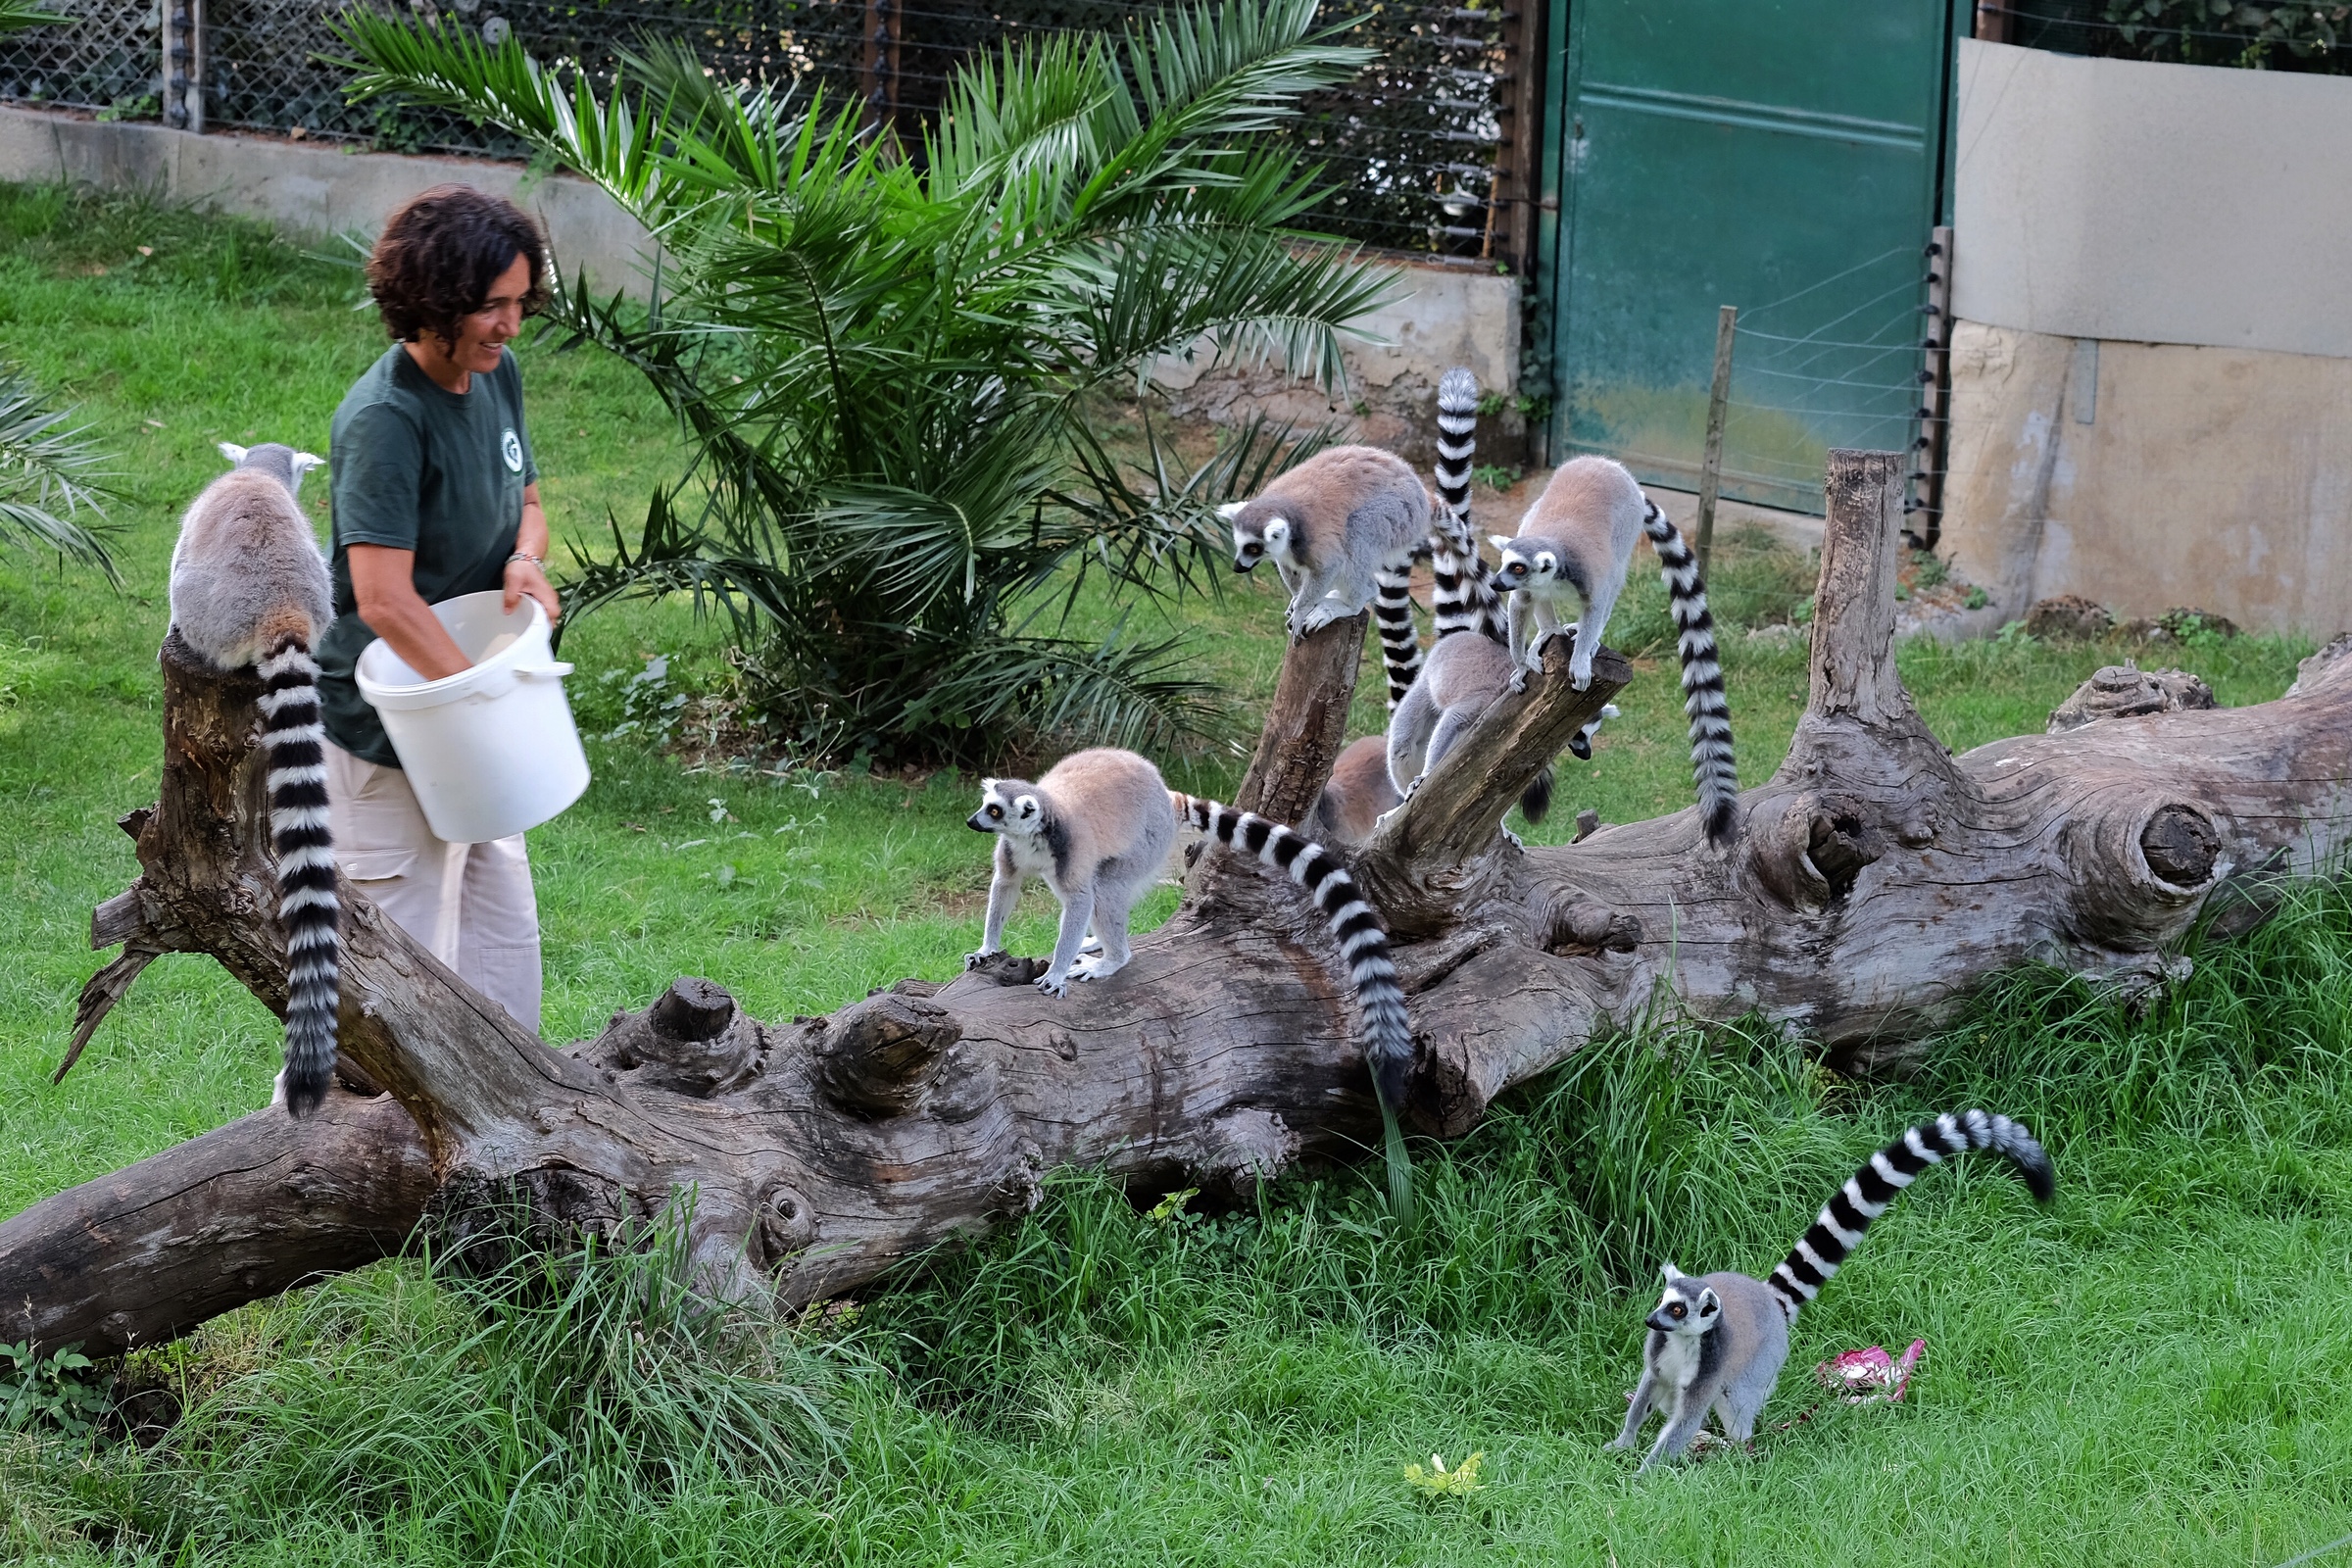 Feeding the lemurs an Italian breakfast at Bioparco Roma.